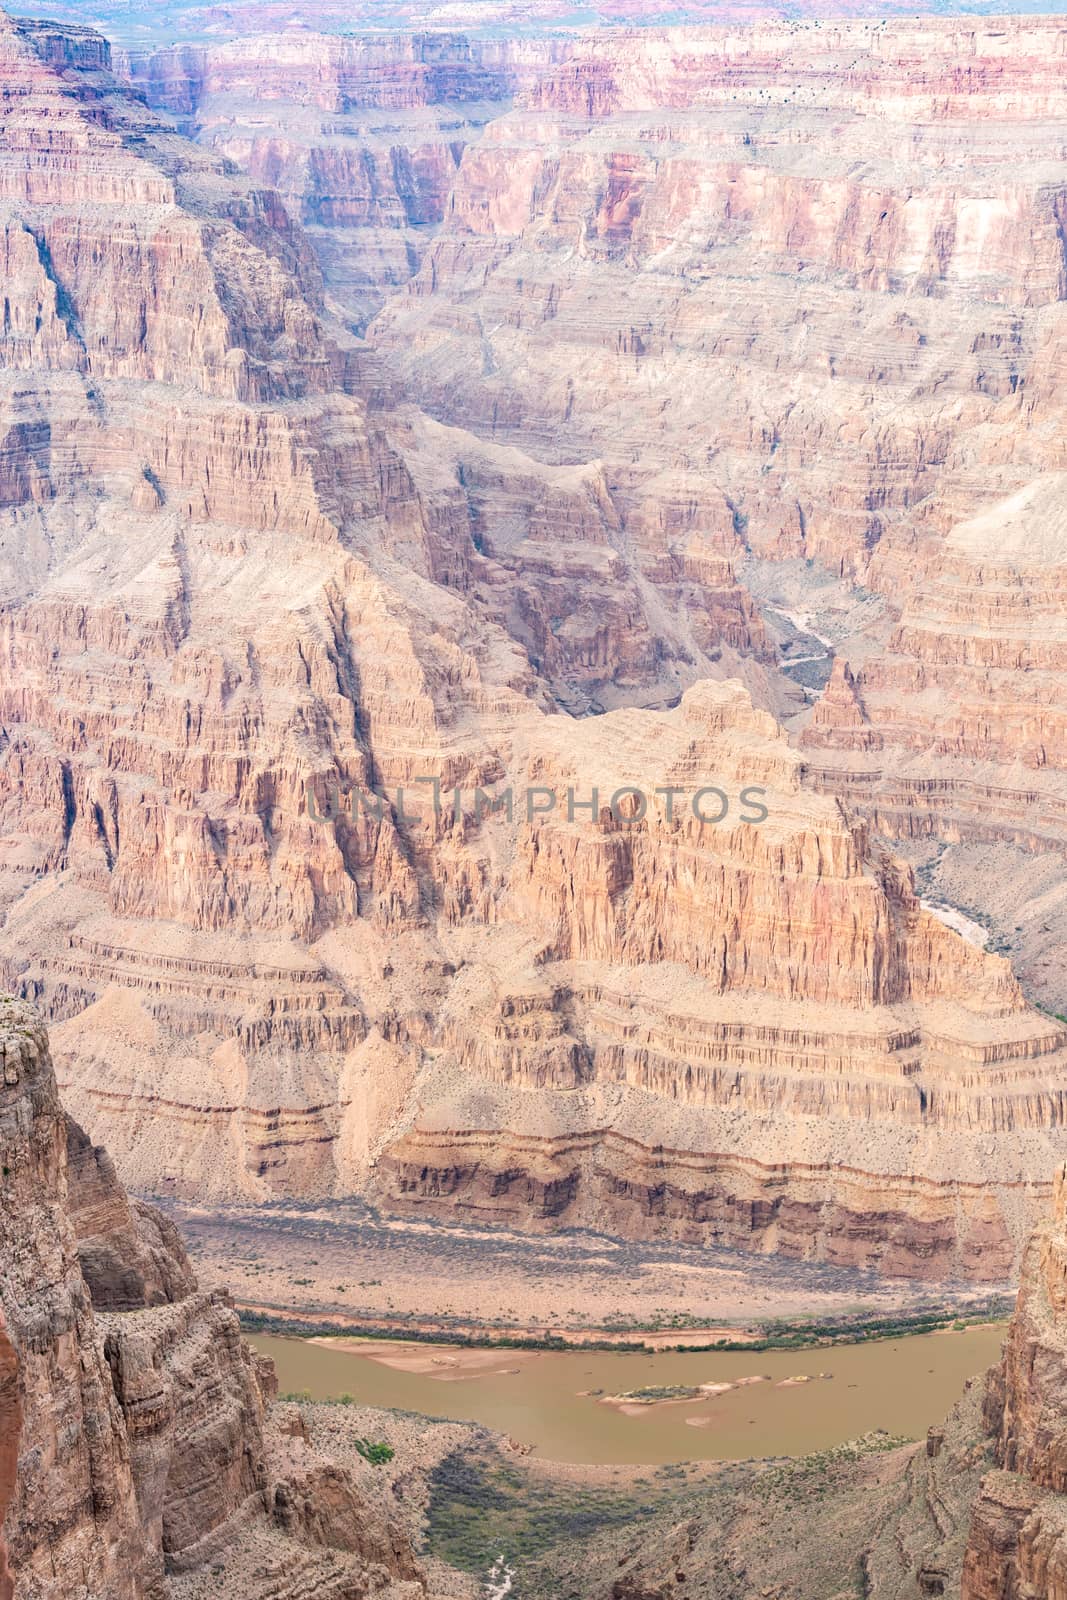 West rim of Grand Canyon in Arizona USA